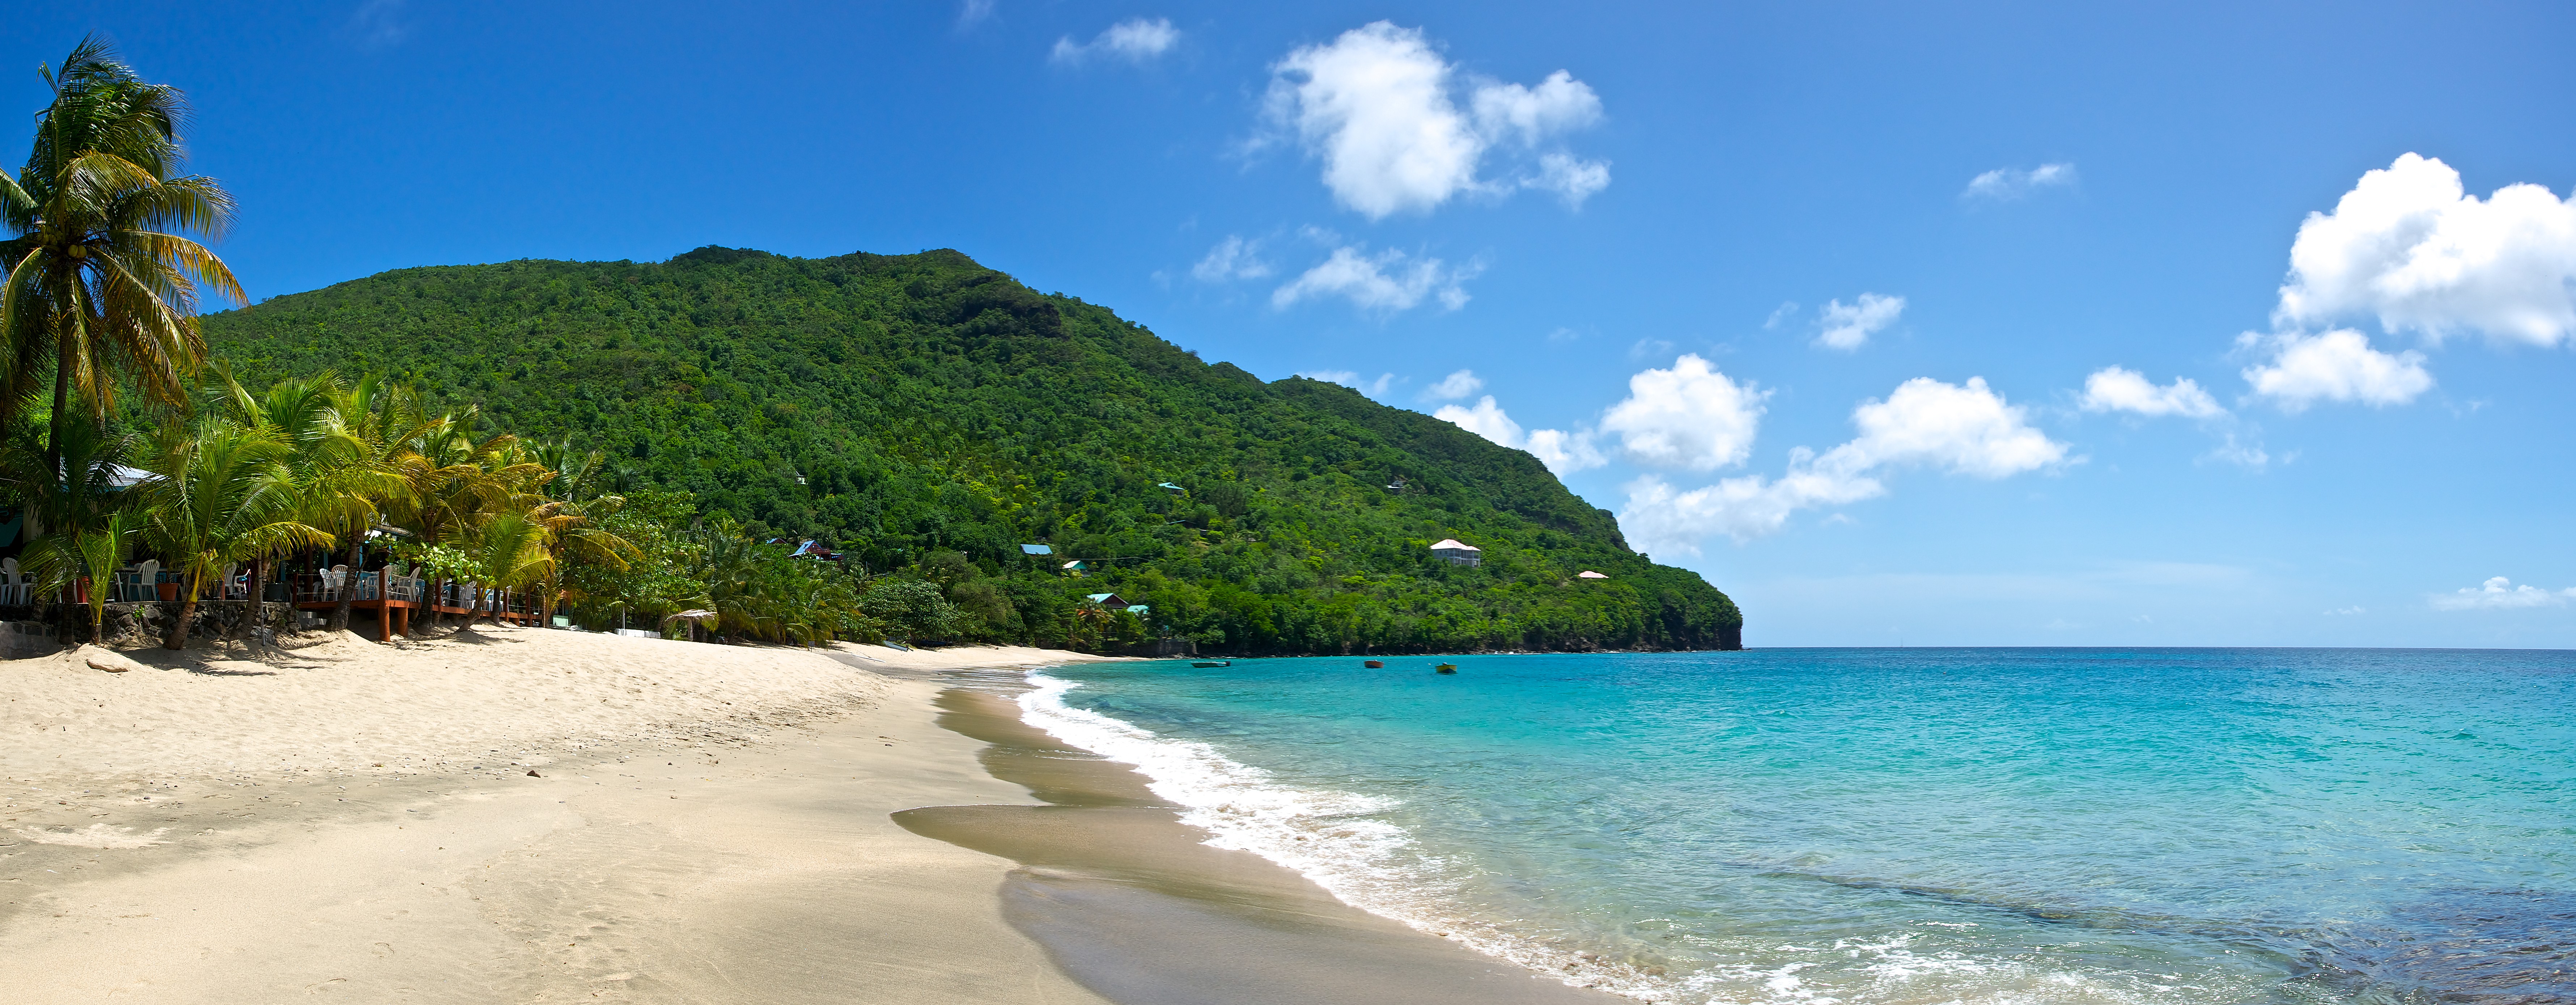 5 motivi per visitare St. Vincent e Grenadine 